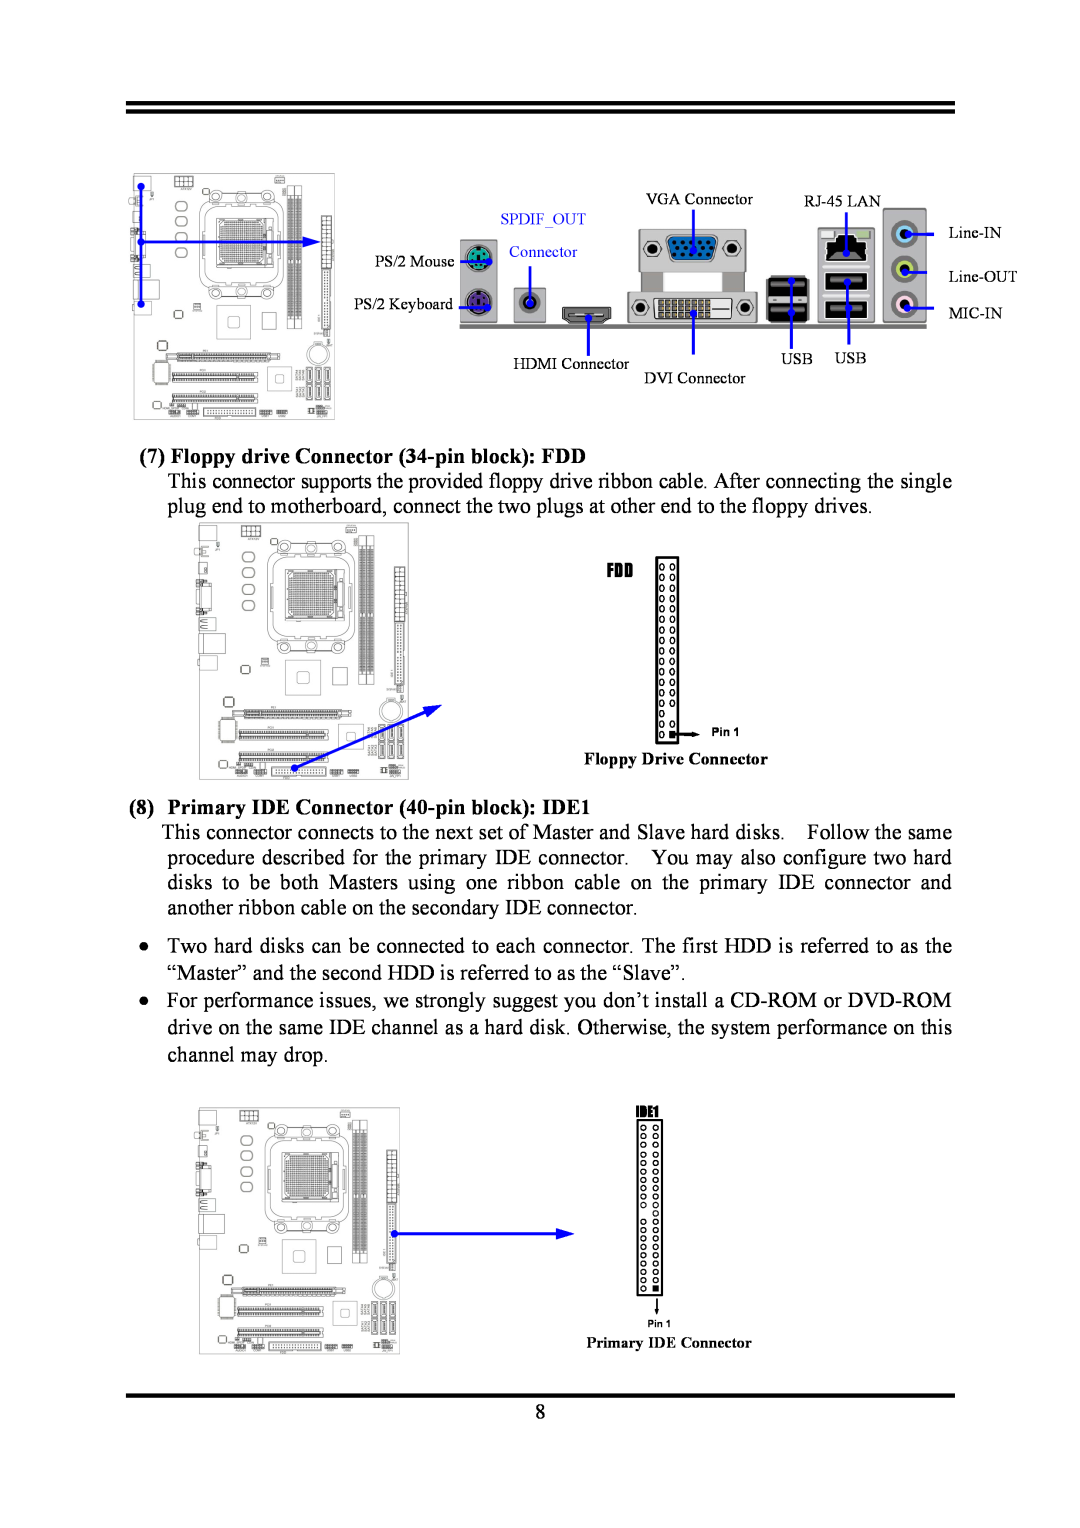 AMD KM780V Floppy drive Connector 34-pin block FDD, Primary IDE Connector 40-pin block IDE1, Floppy Drive Connector 